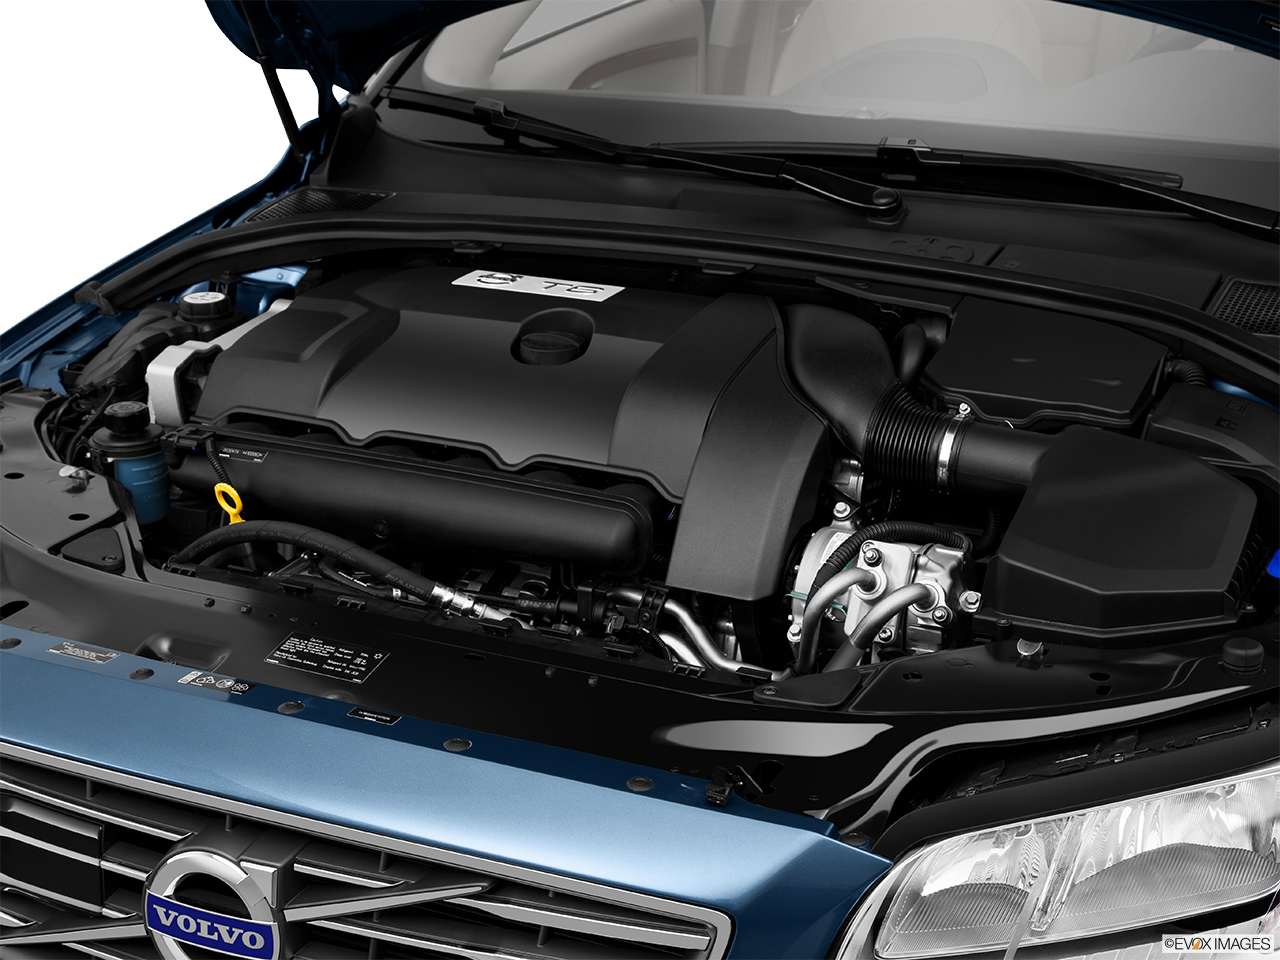 2014 Volvo S80 T6 AWD Platinum Engine. 